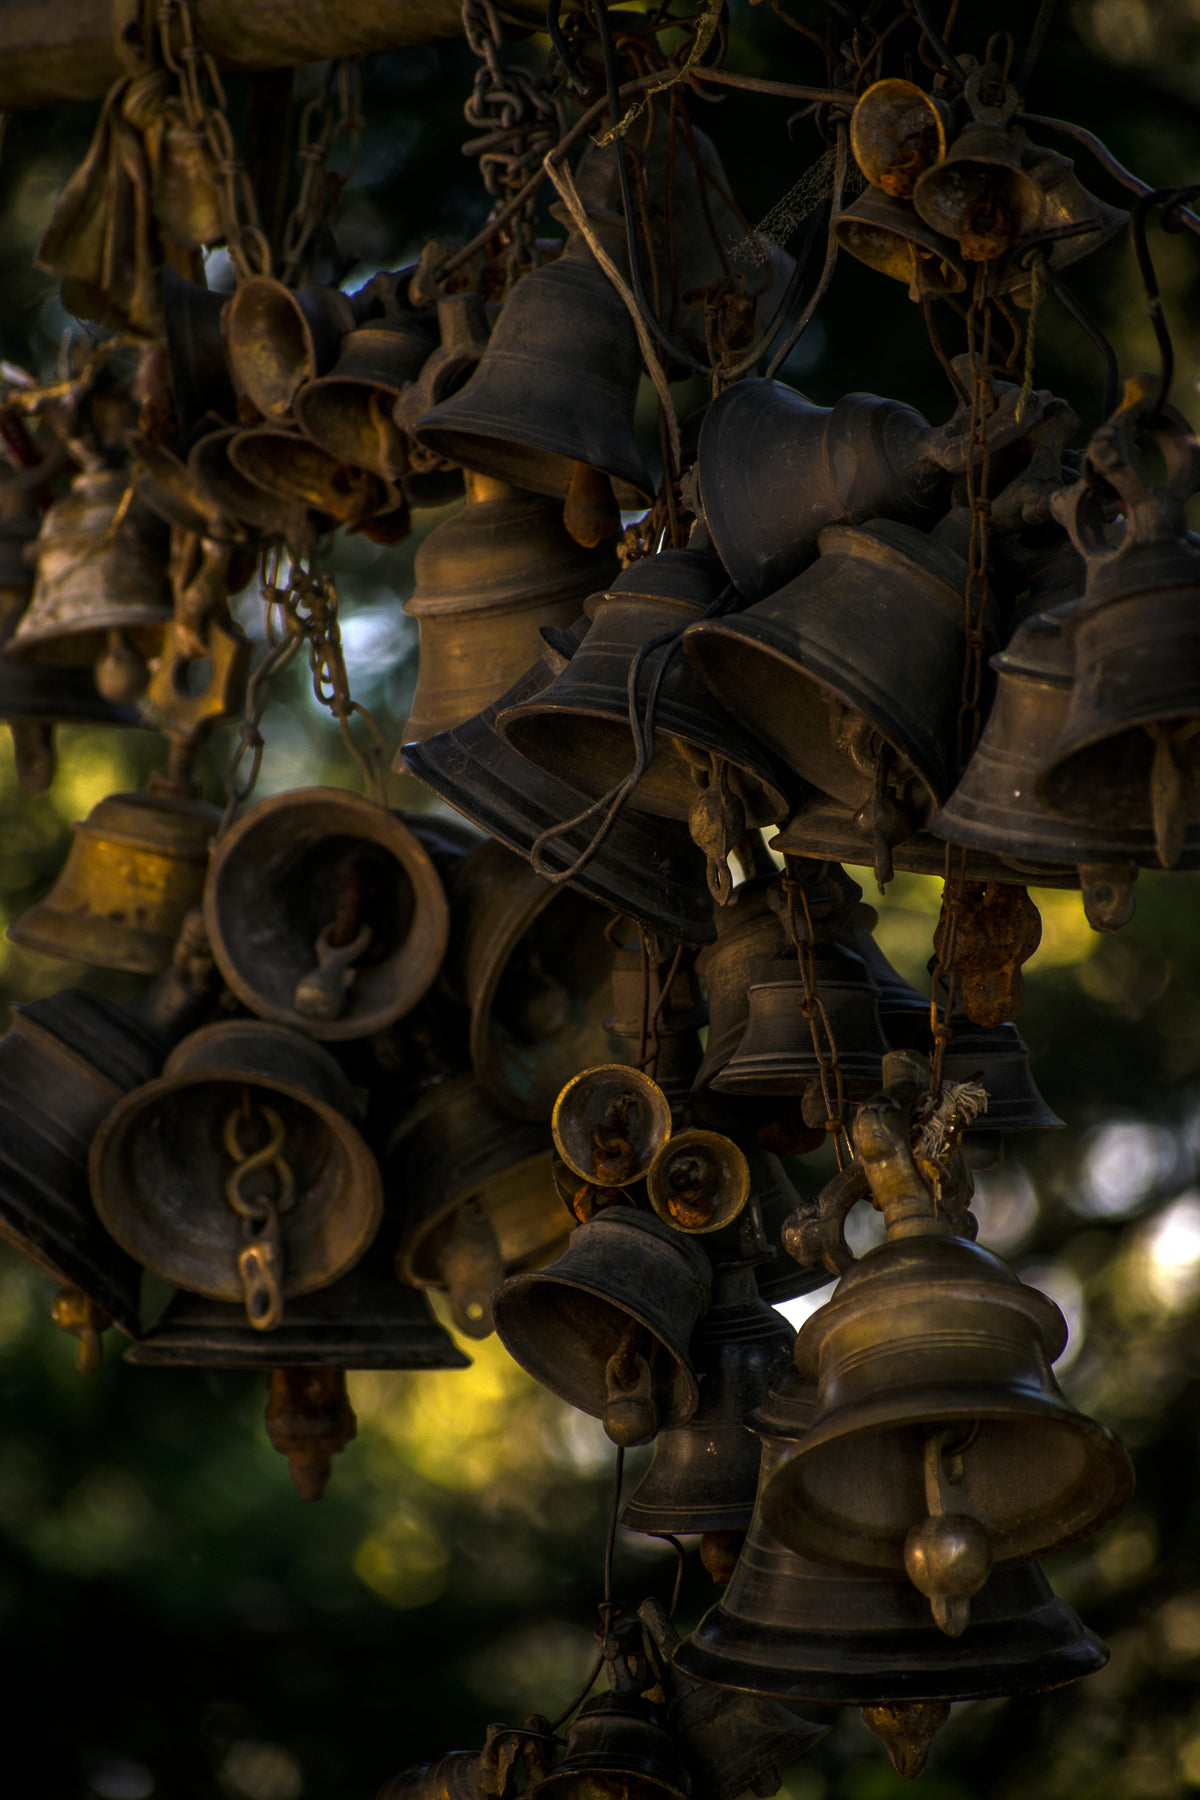 iron bells strung up in a bunch